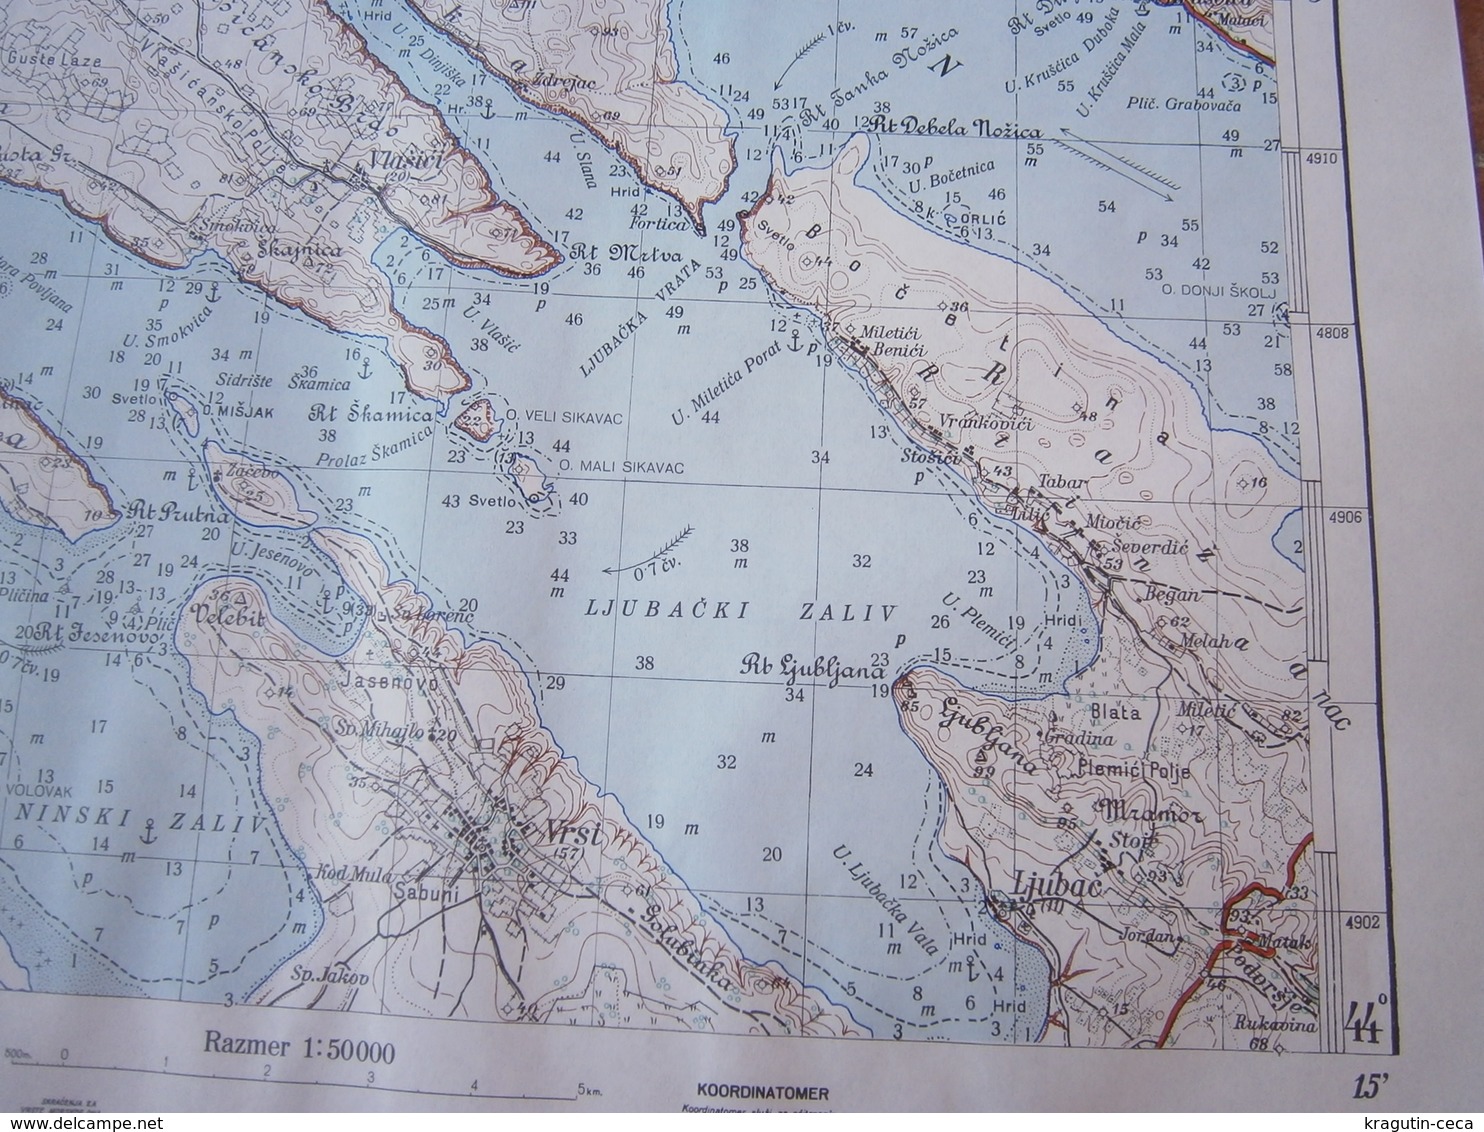 1959 ZADAR CROATIA JNA YUGOSLAVIA ARMY MAP MILITARY CHART PLAN ADRIATIC SEA BARIĆ DRAGA LJUBAČ VRST PRIVLAKA POVLJANA